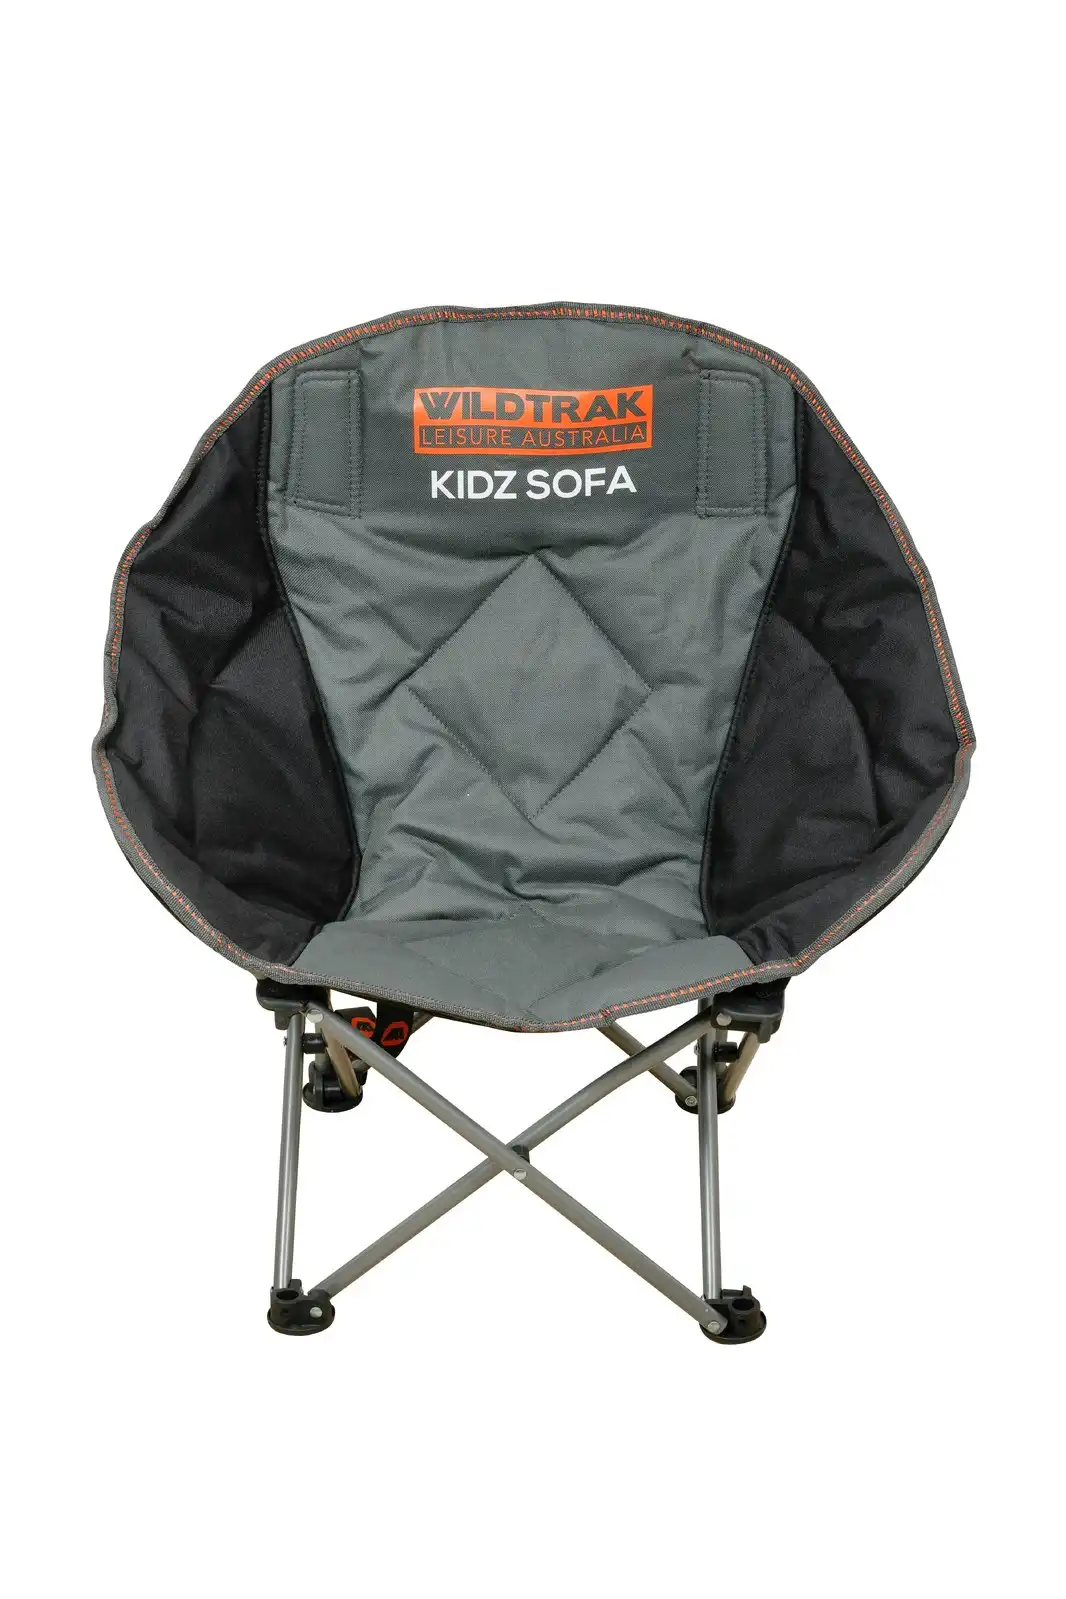 Wildtrak Kidz Foldable 62cm Sofa Chair Portable Outdoor Camping Seat Grey/Black